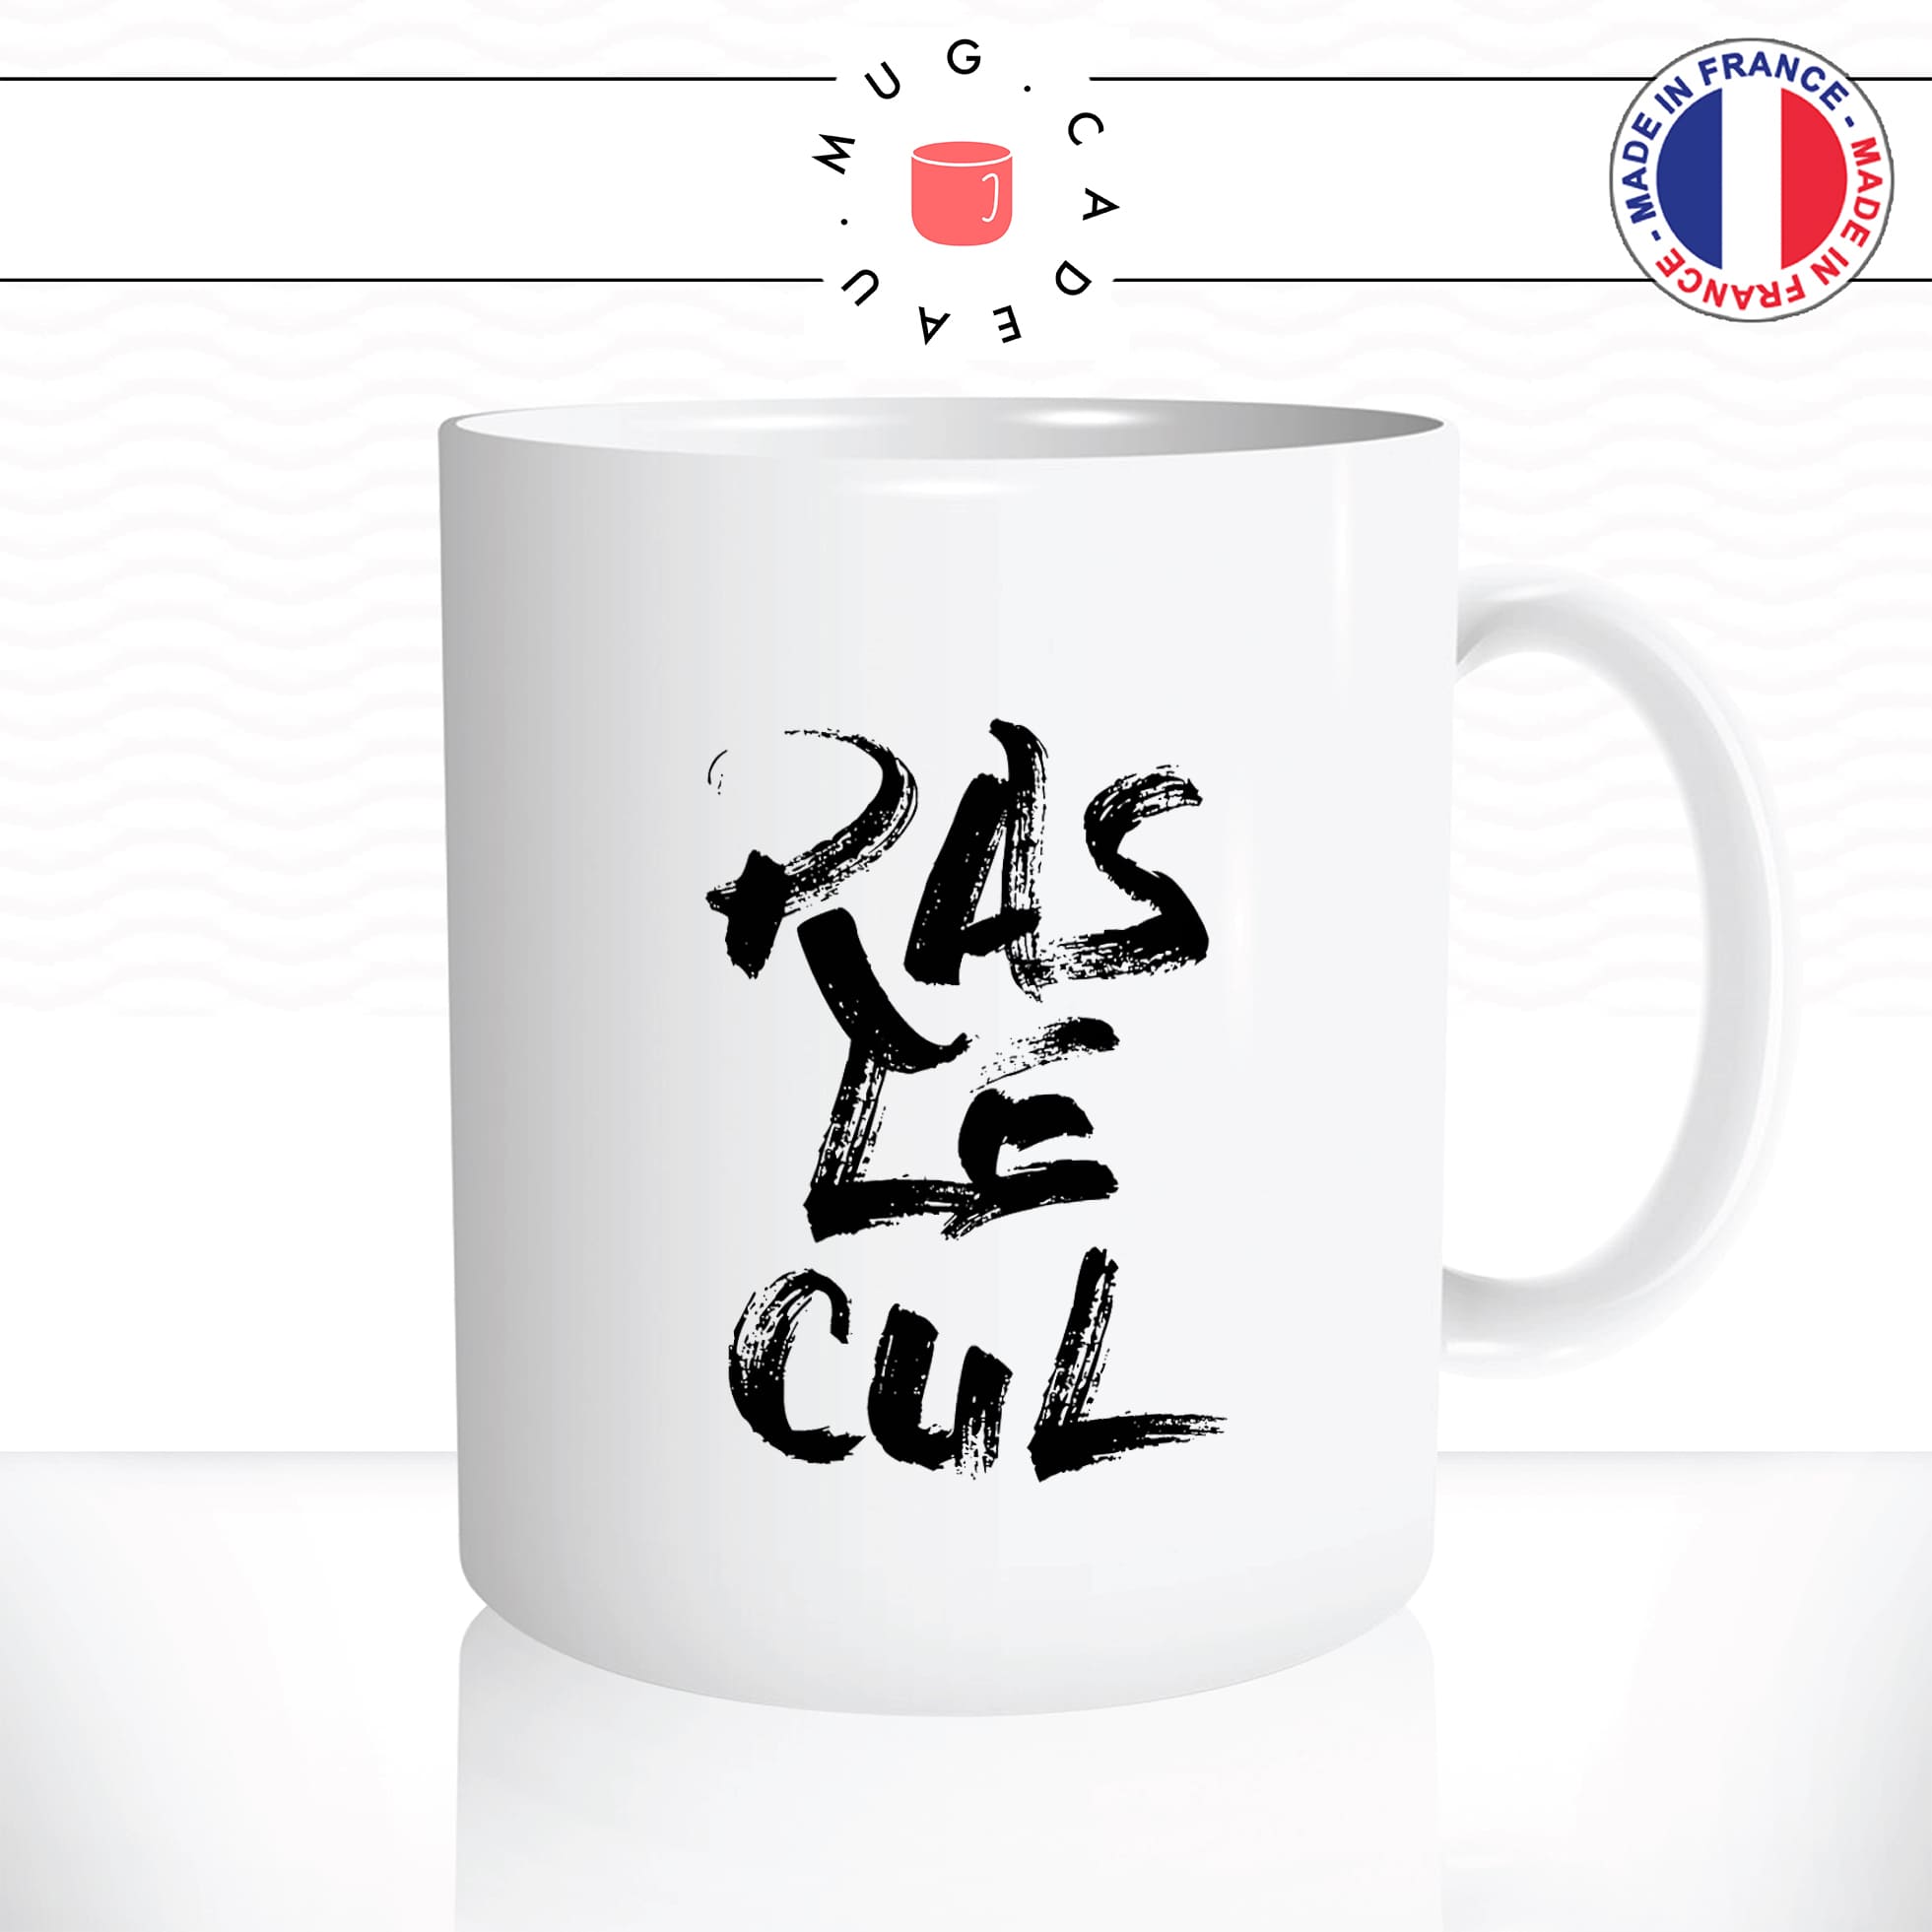 mug-tasse-blanc-ras-le-cul-jen-ai-marre-expression-phrase-fransaice-humour-fun-idée-cadeau-originale-cool2